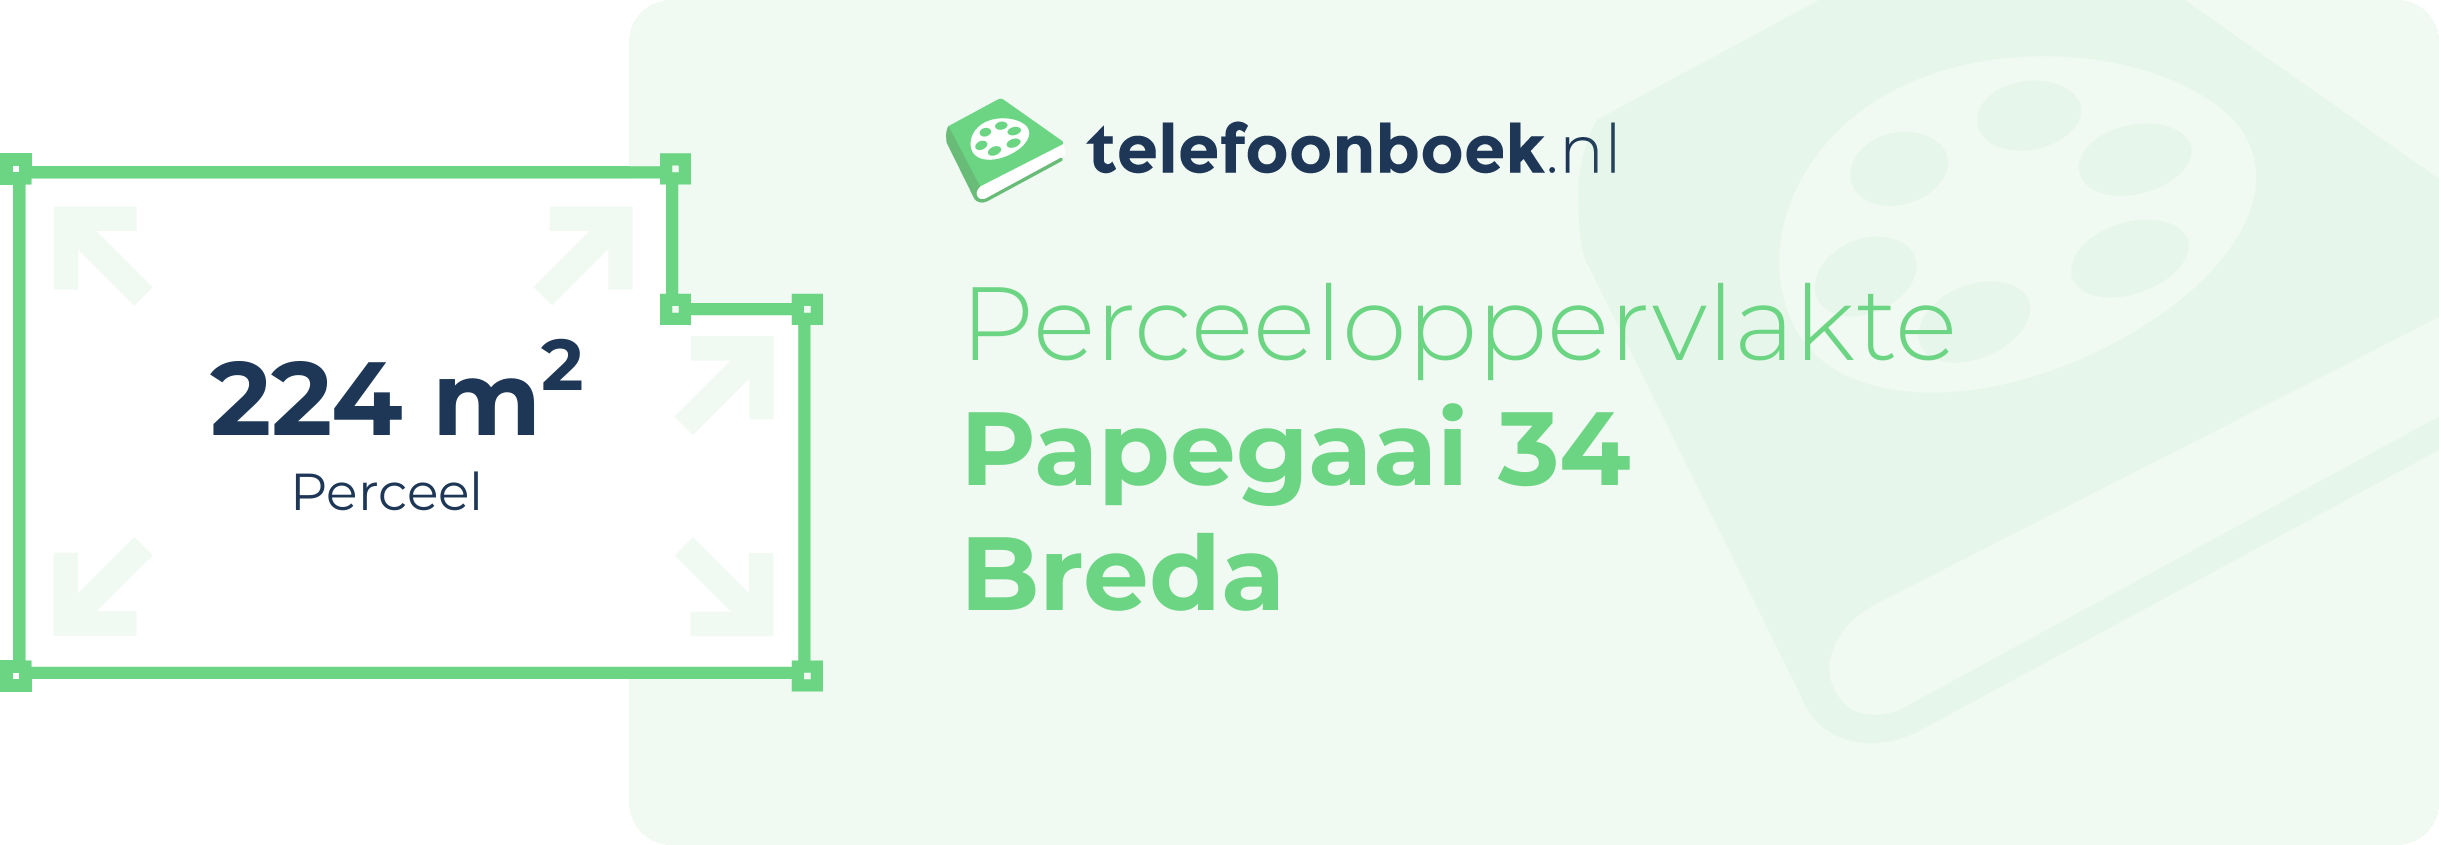 Perceeloppervlakte Papegaai 34 Breda